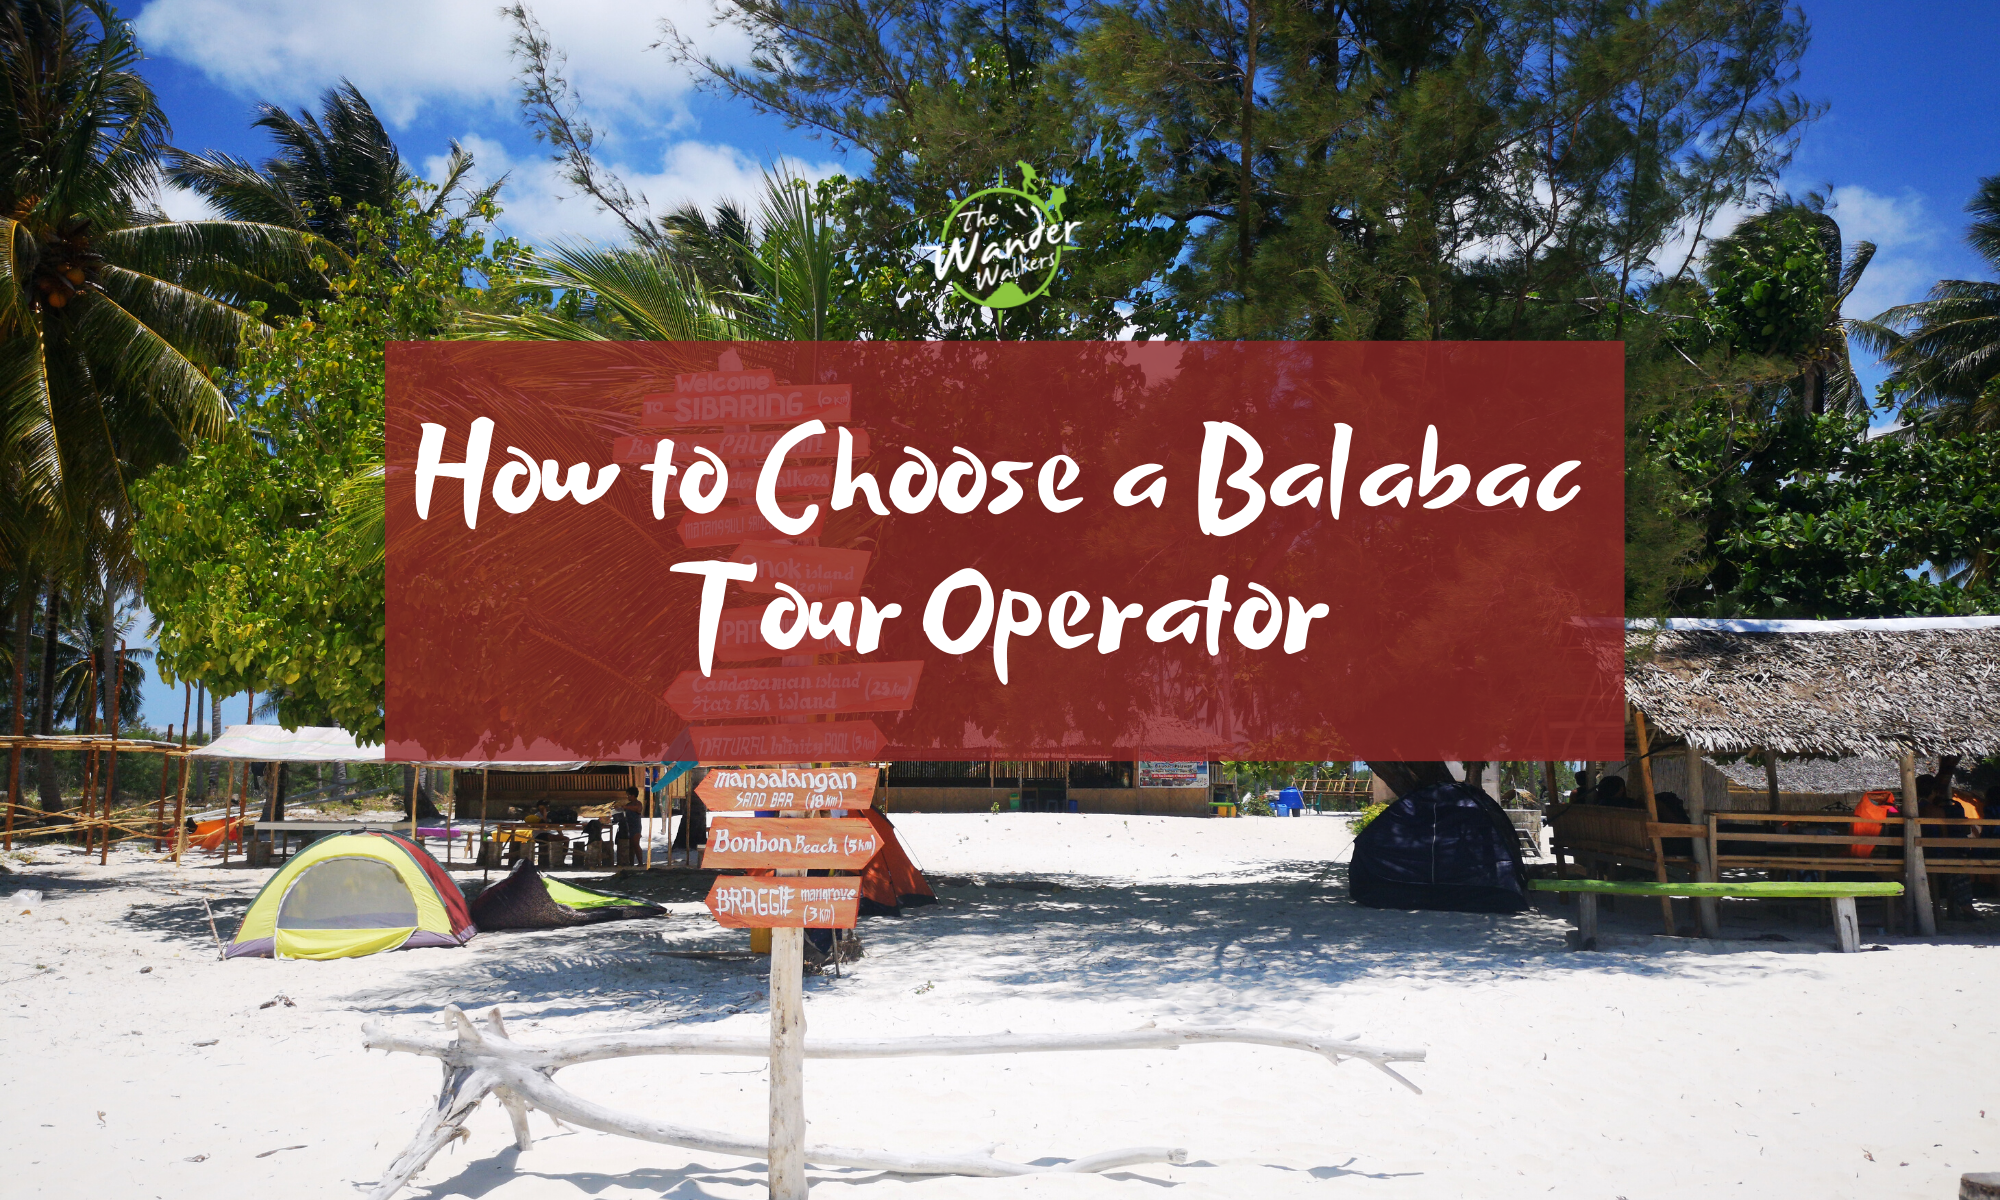 Balabac Tour Operator